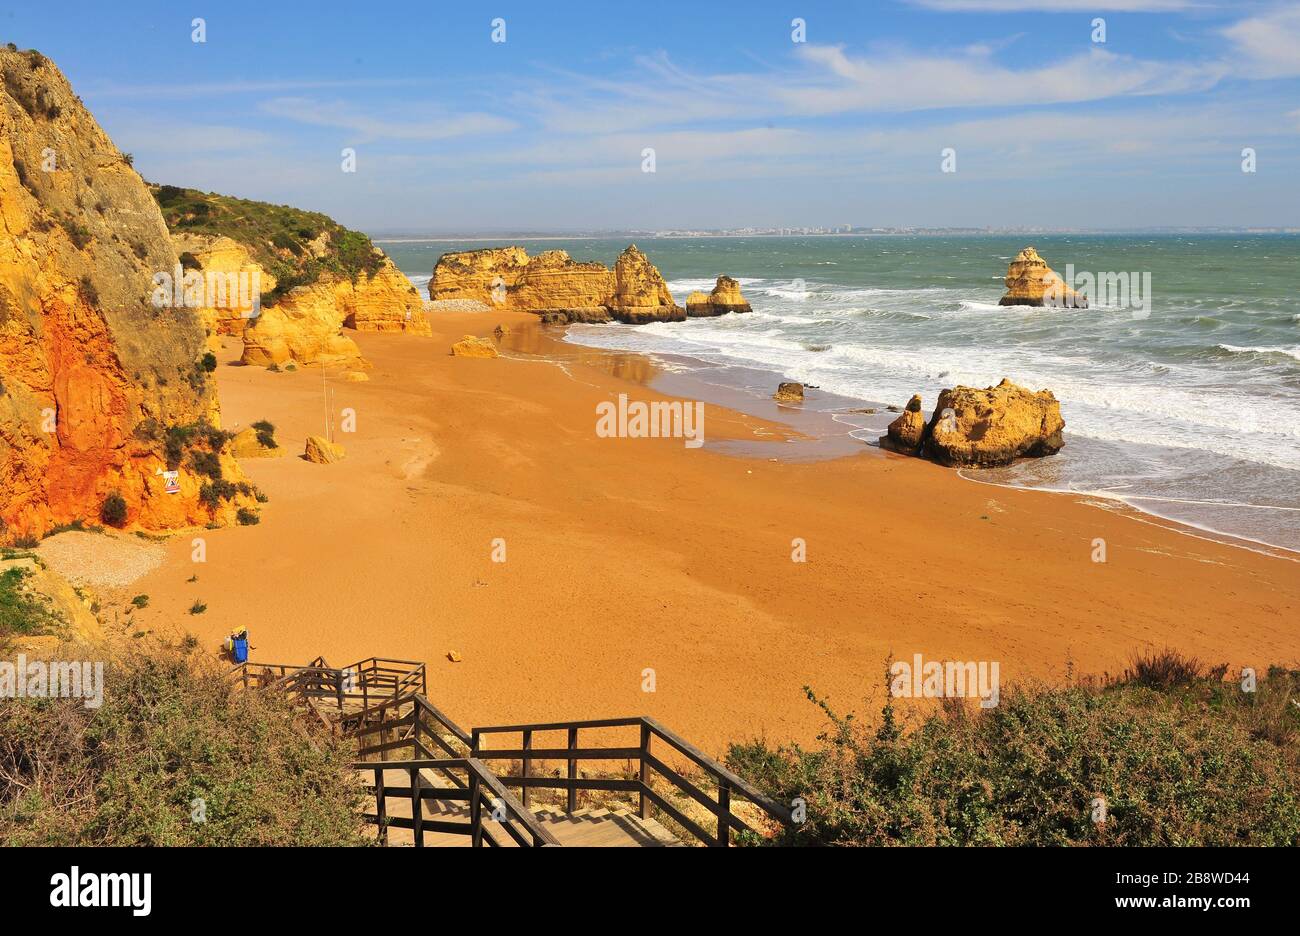 Top view of Santa Ana rocky beach in Lagos, Portugal Stock Photo